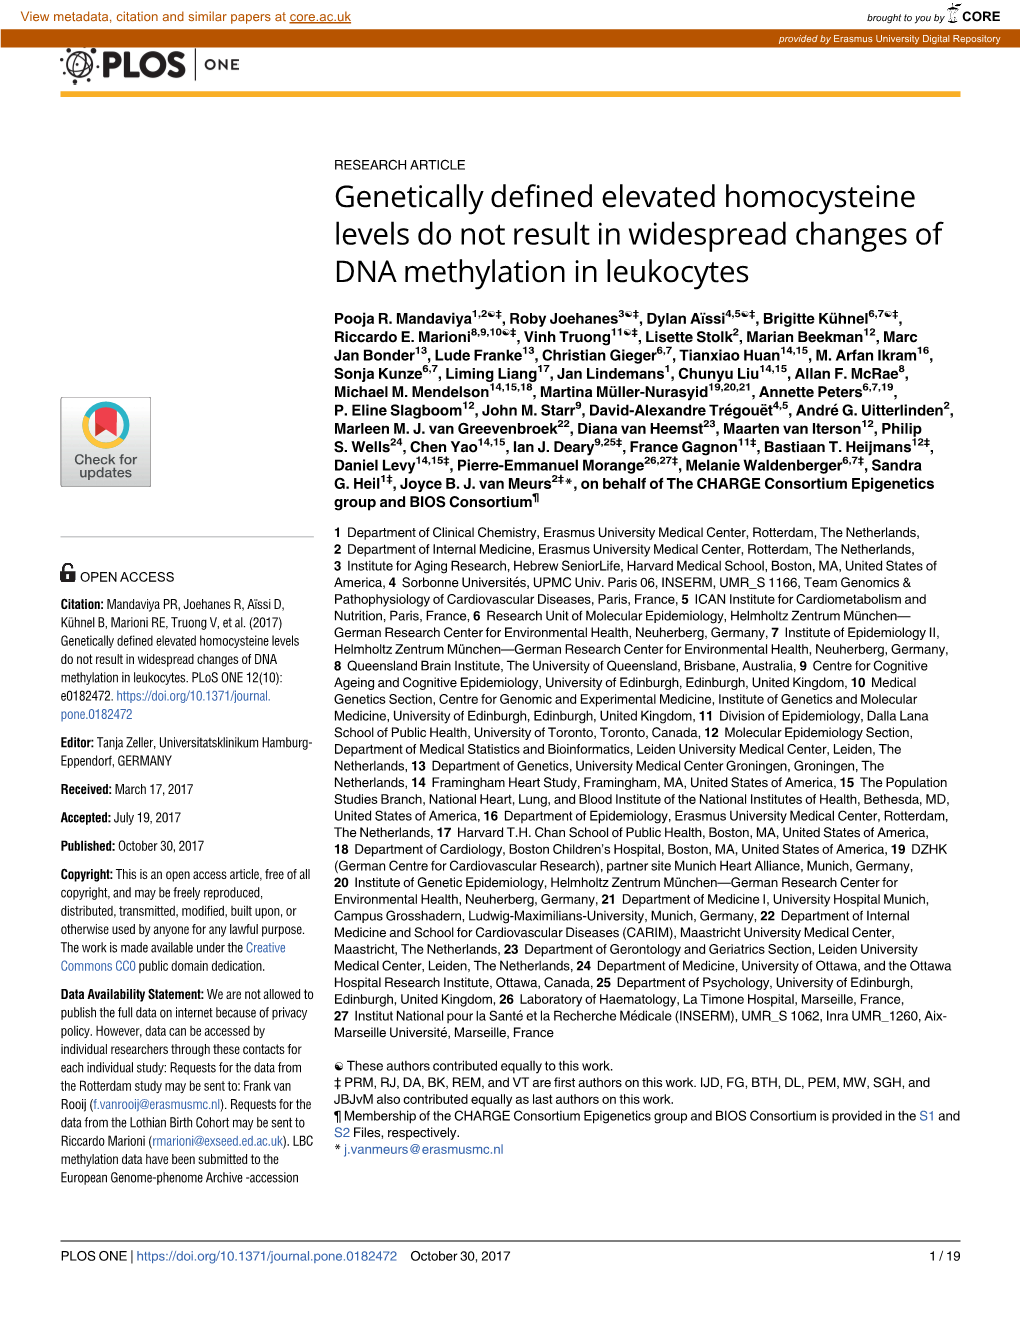 Genetically Defined Elevated Homocysteine Levels Do Not Result in Widespread Changes of DNA Methylation in Leukocytes